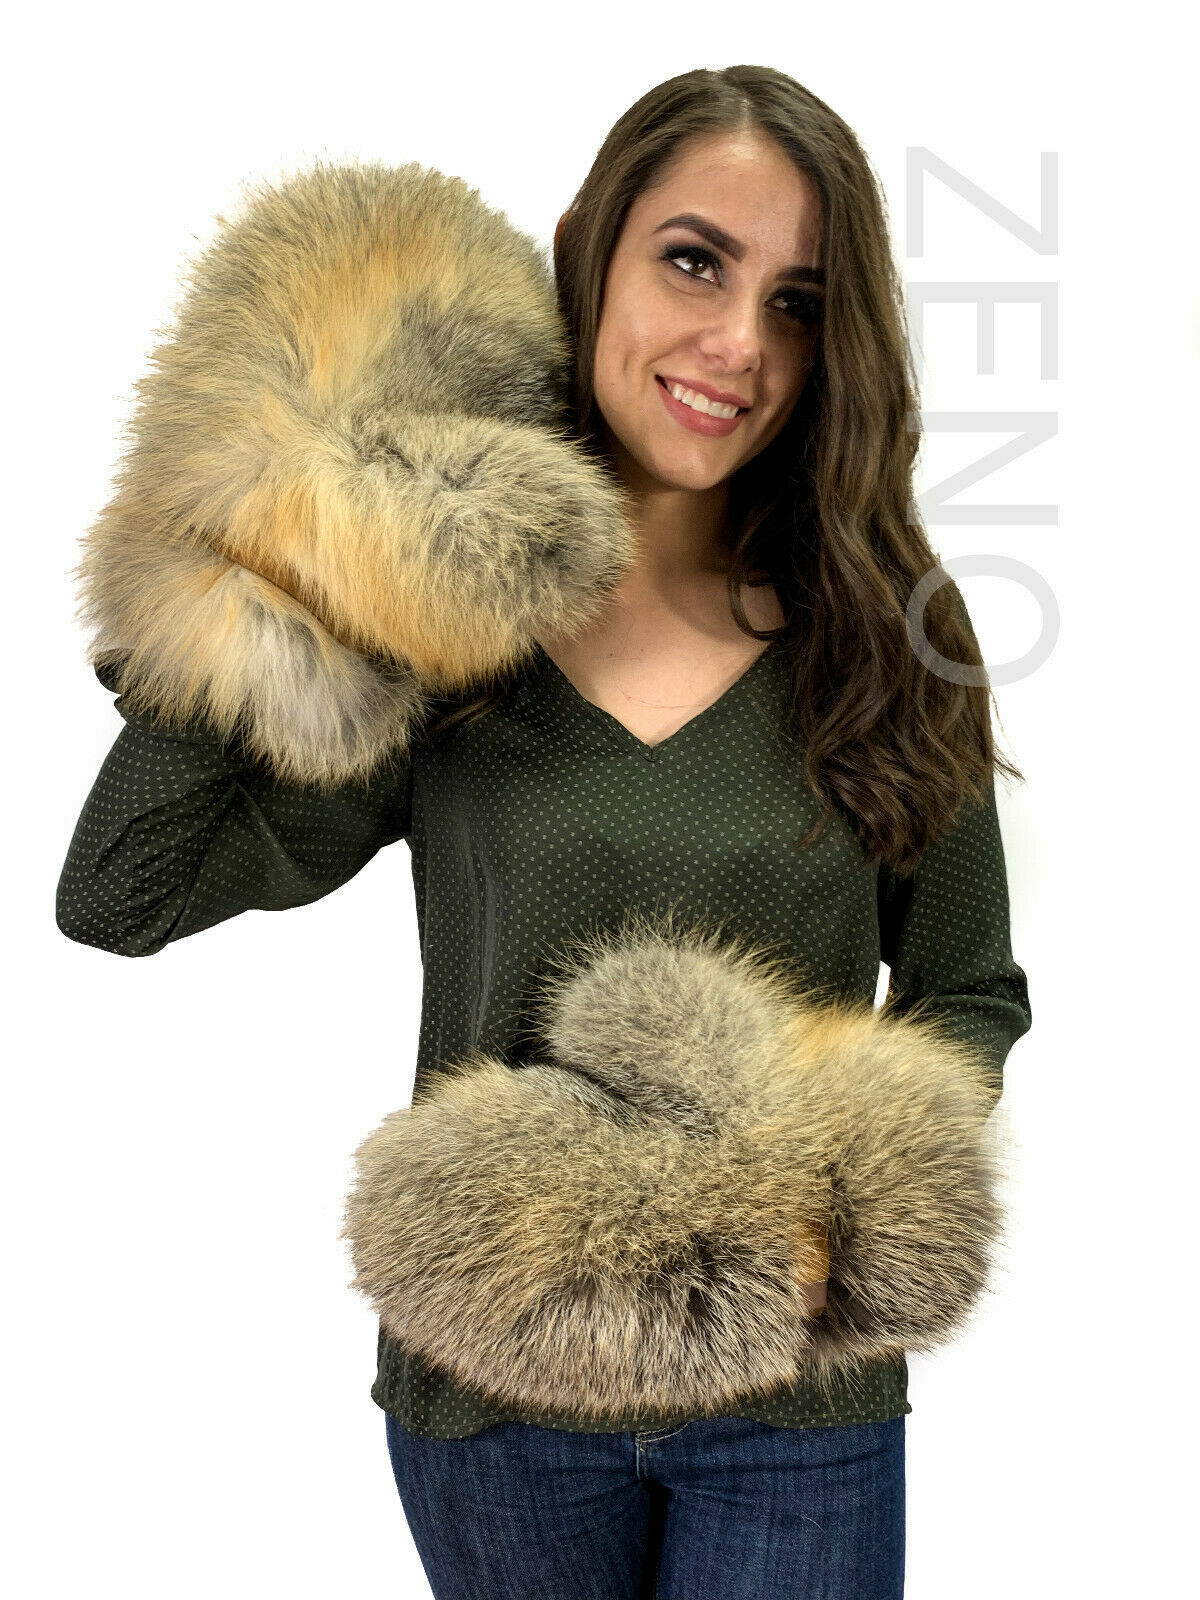 Giant Natural Golden Island Fox Fur 